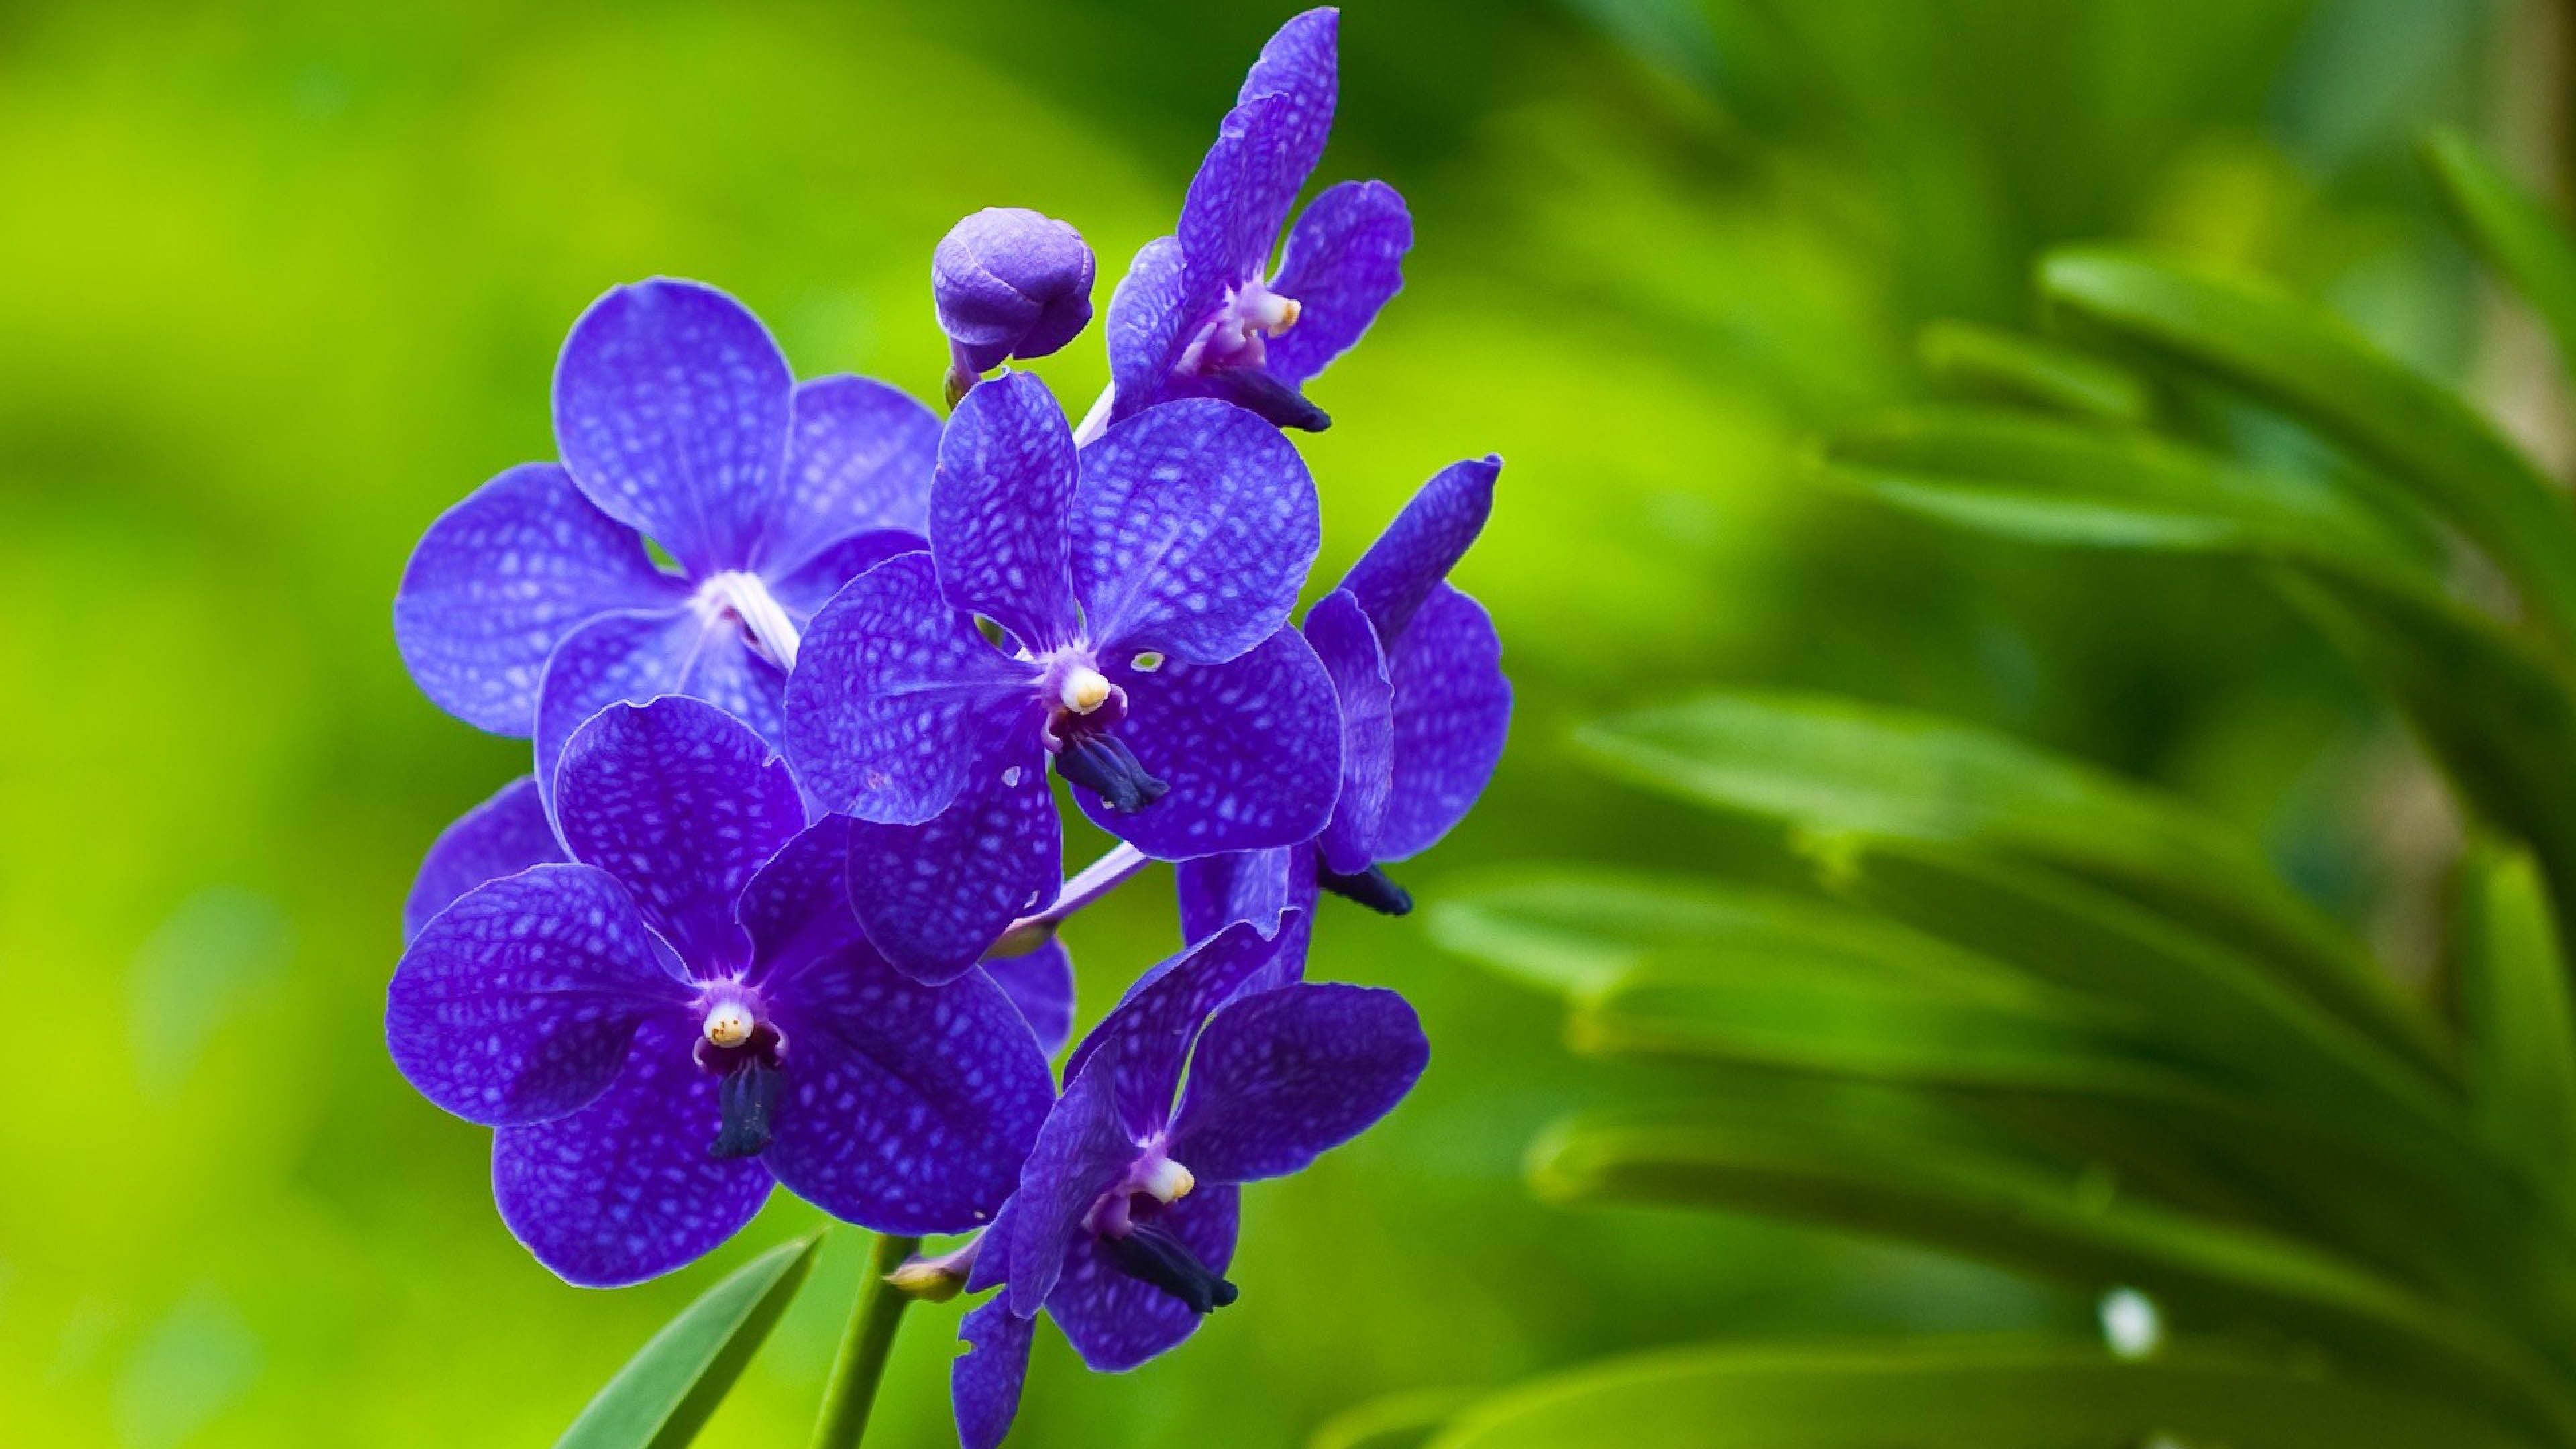 Amazing Close Up On Purple Flower 16 9 Ultra HD. Flower Iphone Wallpaper, Orchid Wallpaper, Purple Flowers Wallpaper